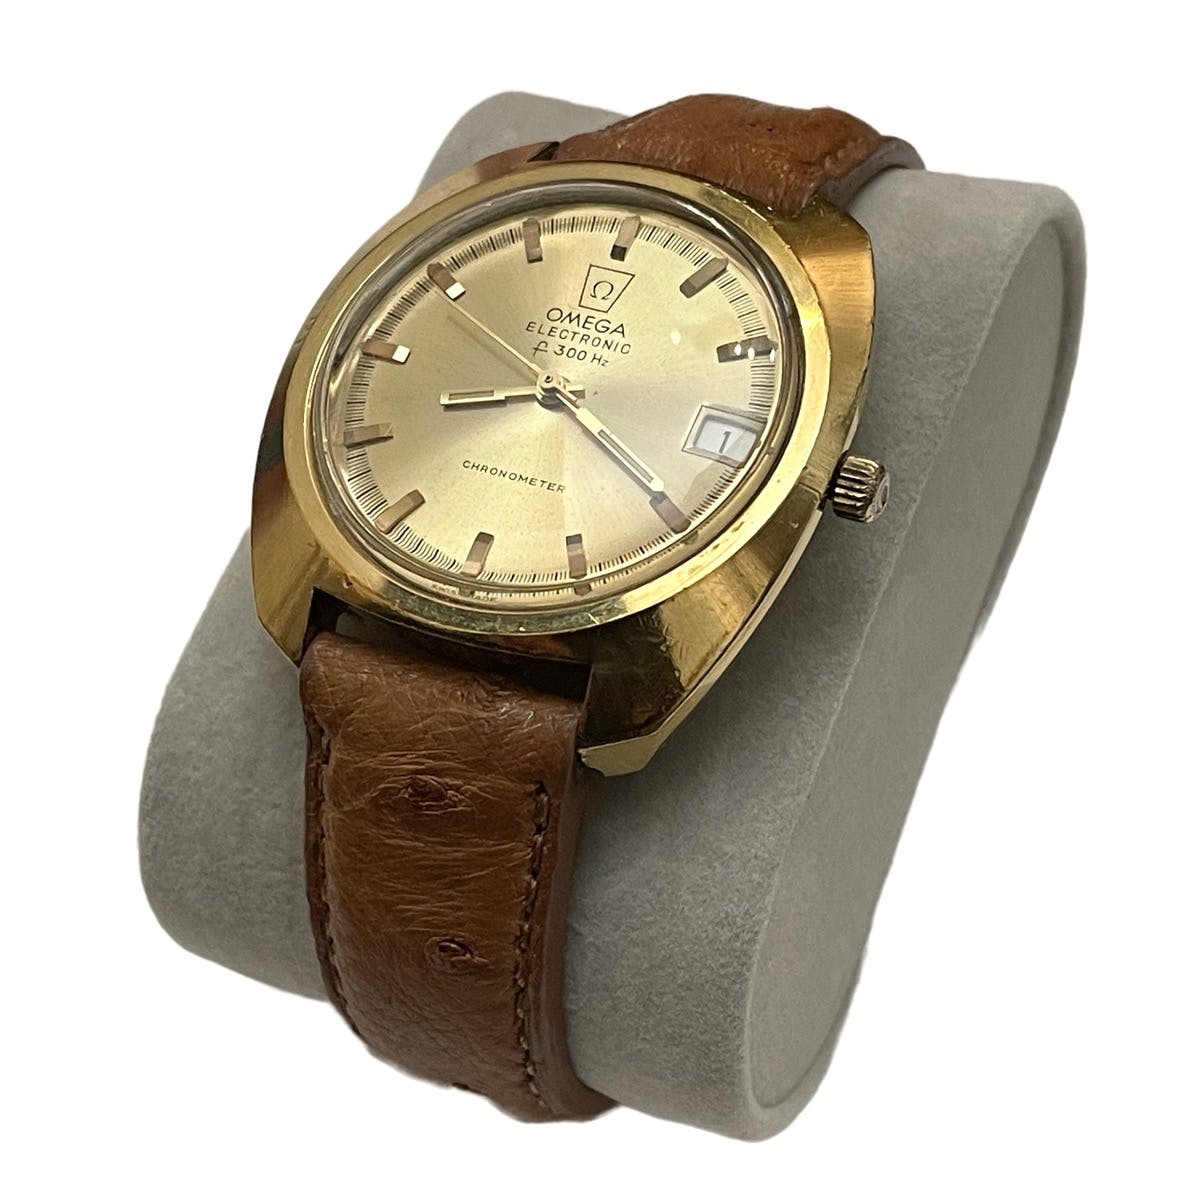 Omega - Vintage 1972 Gold Geneve Electronic Chronometer Watch - 2